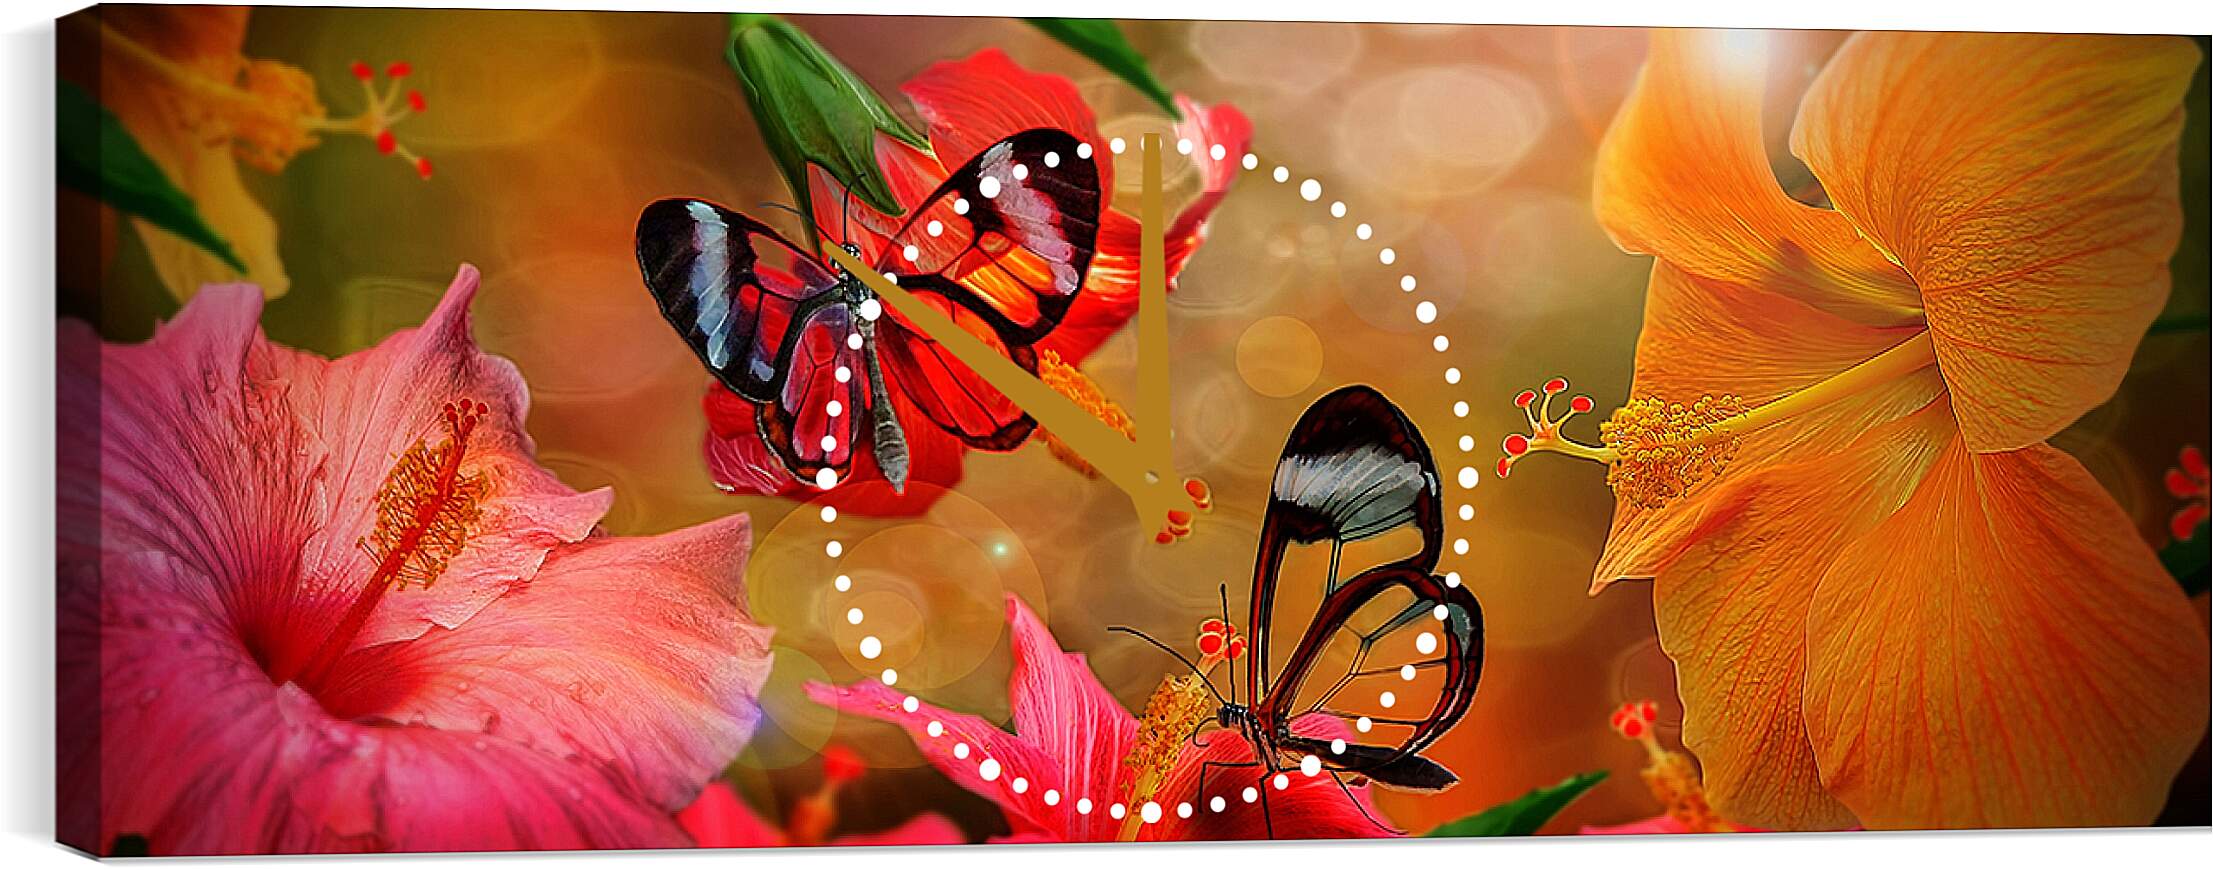 Часы картина - Две бабочки